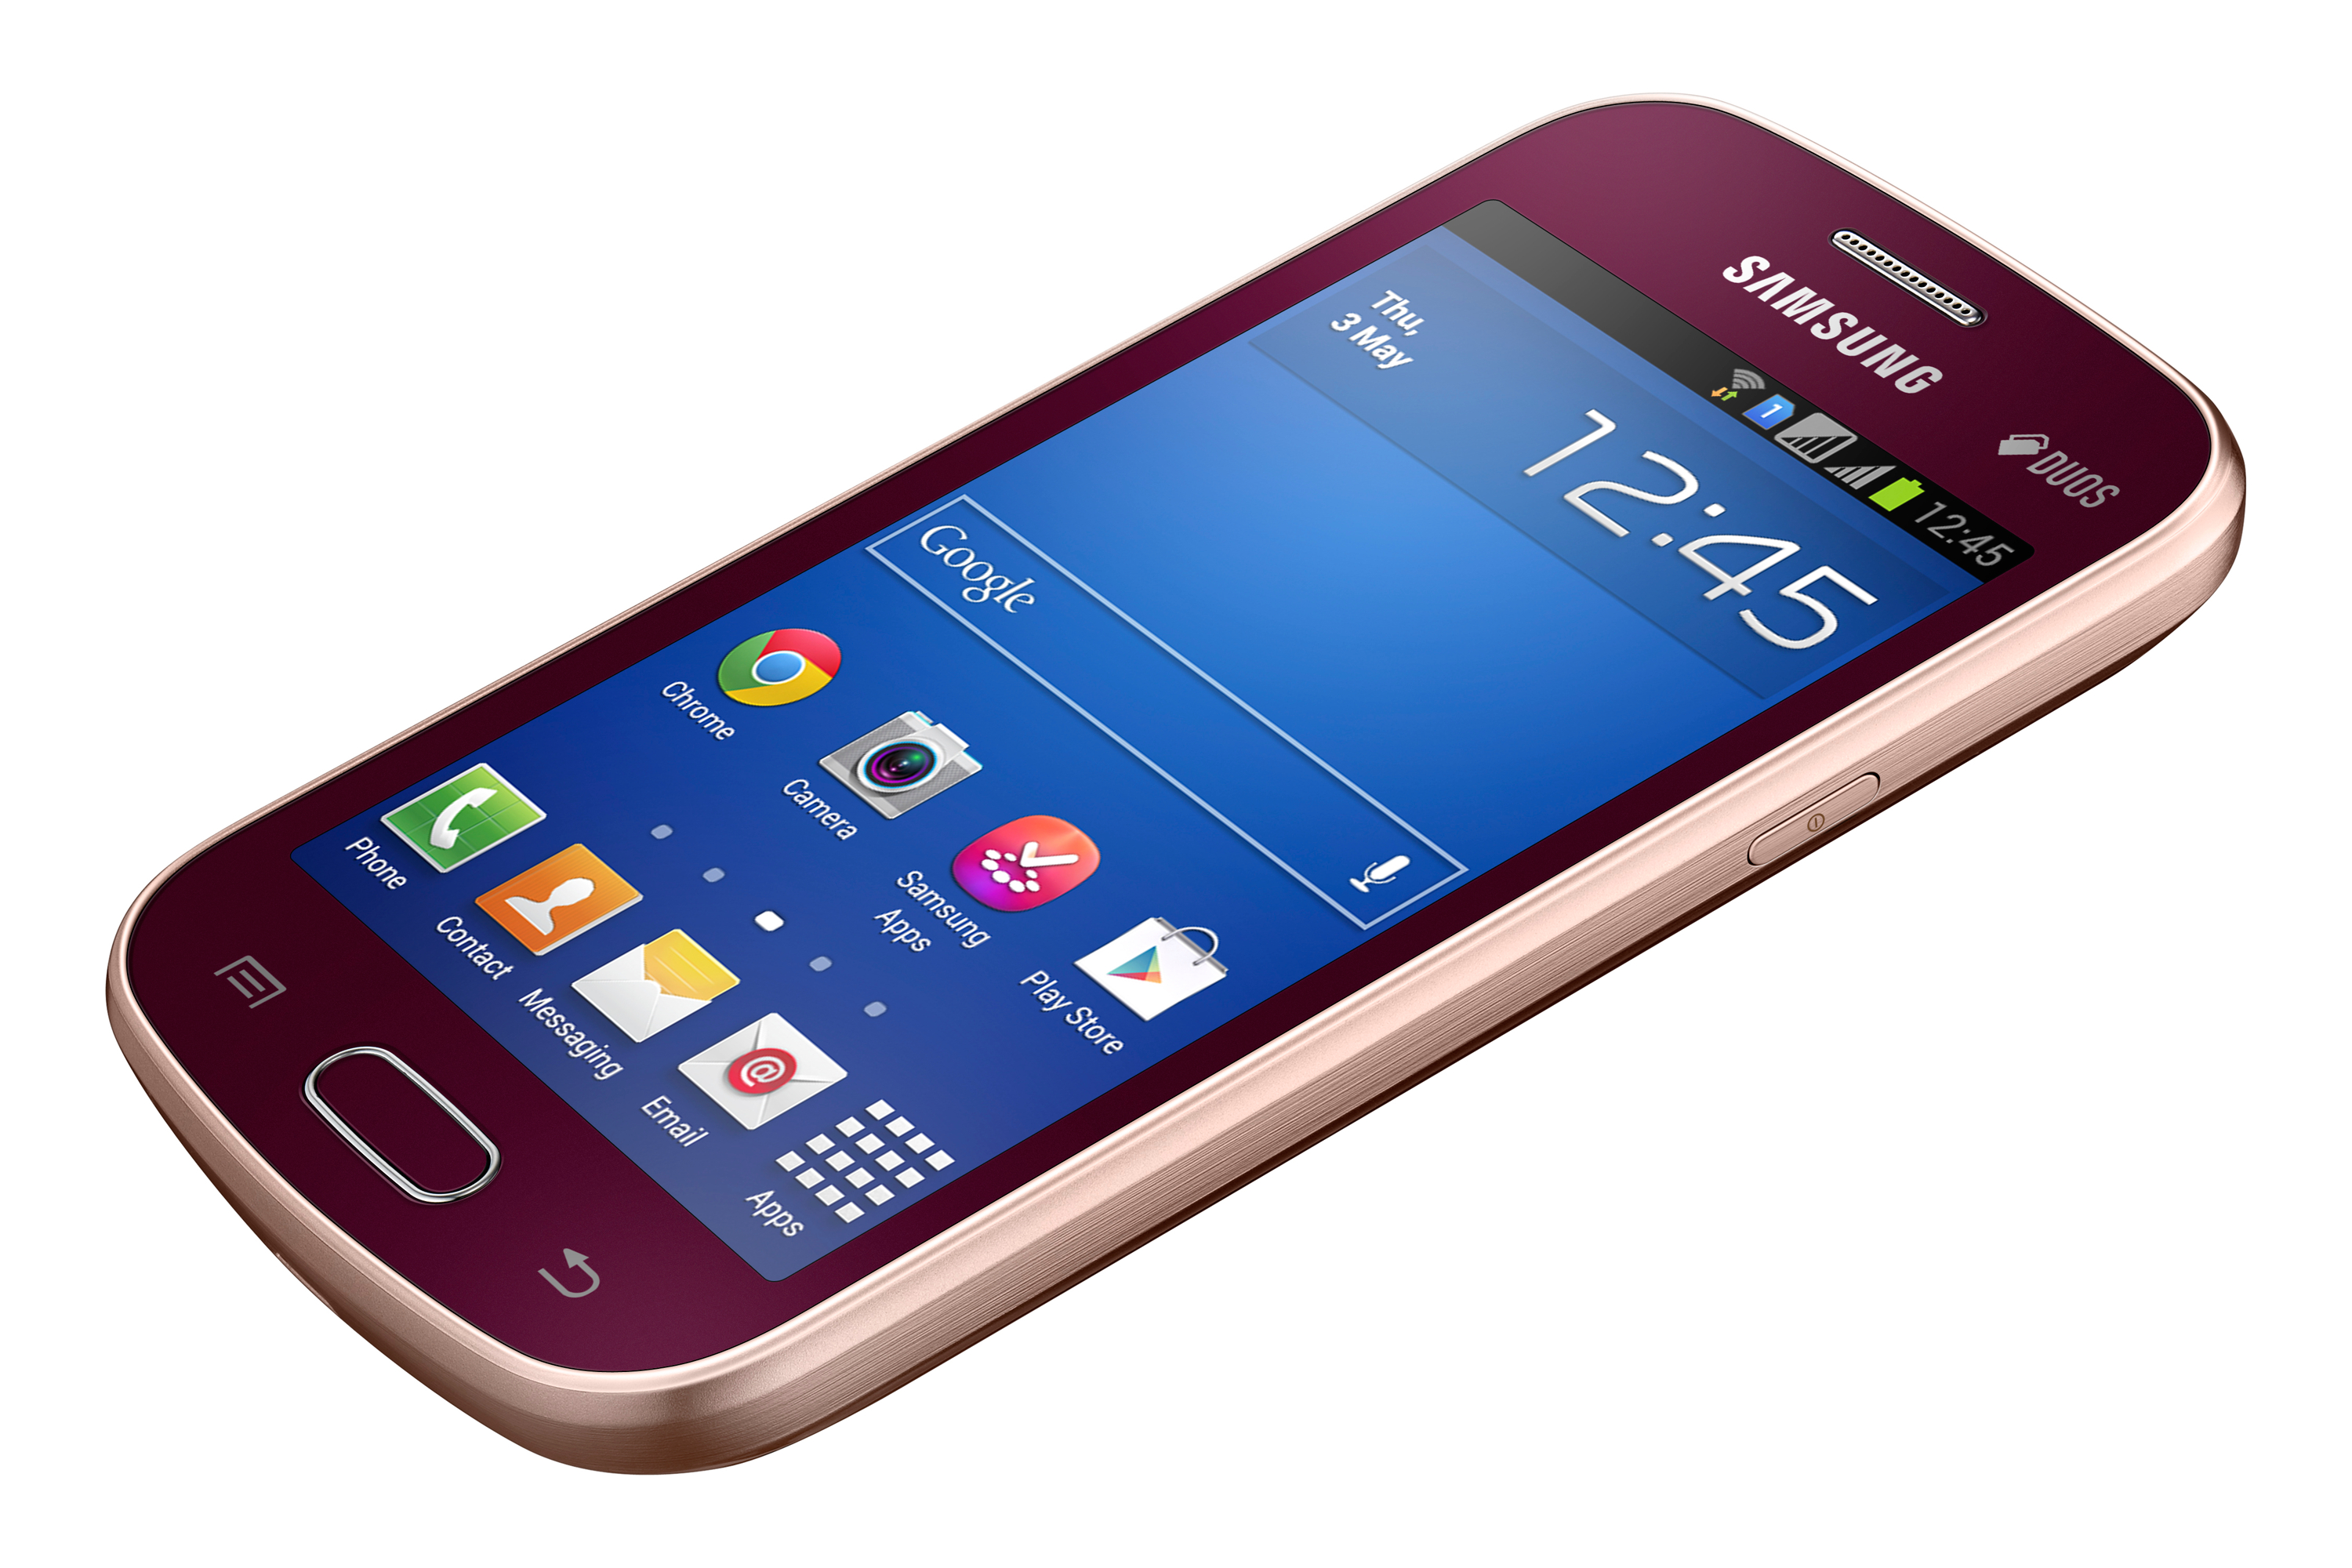 Samsung star plus. Samsung Galaxy Star Plus gt-s7262. Samsung Galaxy trend s7390. Samsung trend gt-s7390. Samsung Duos gt-s7262.